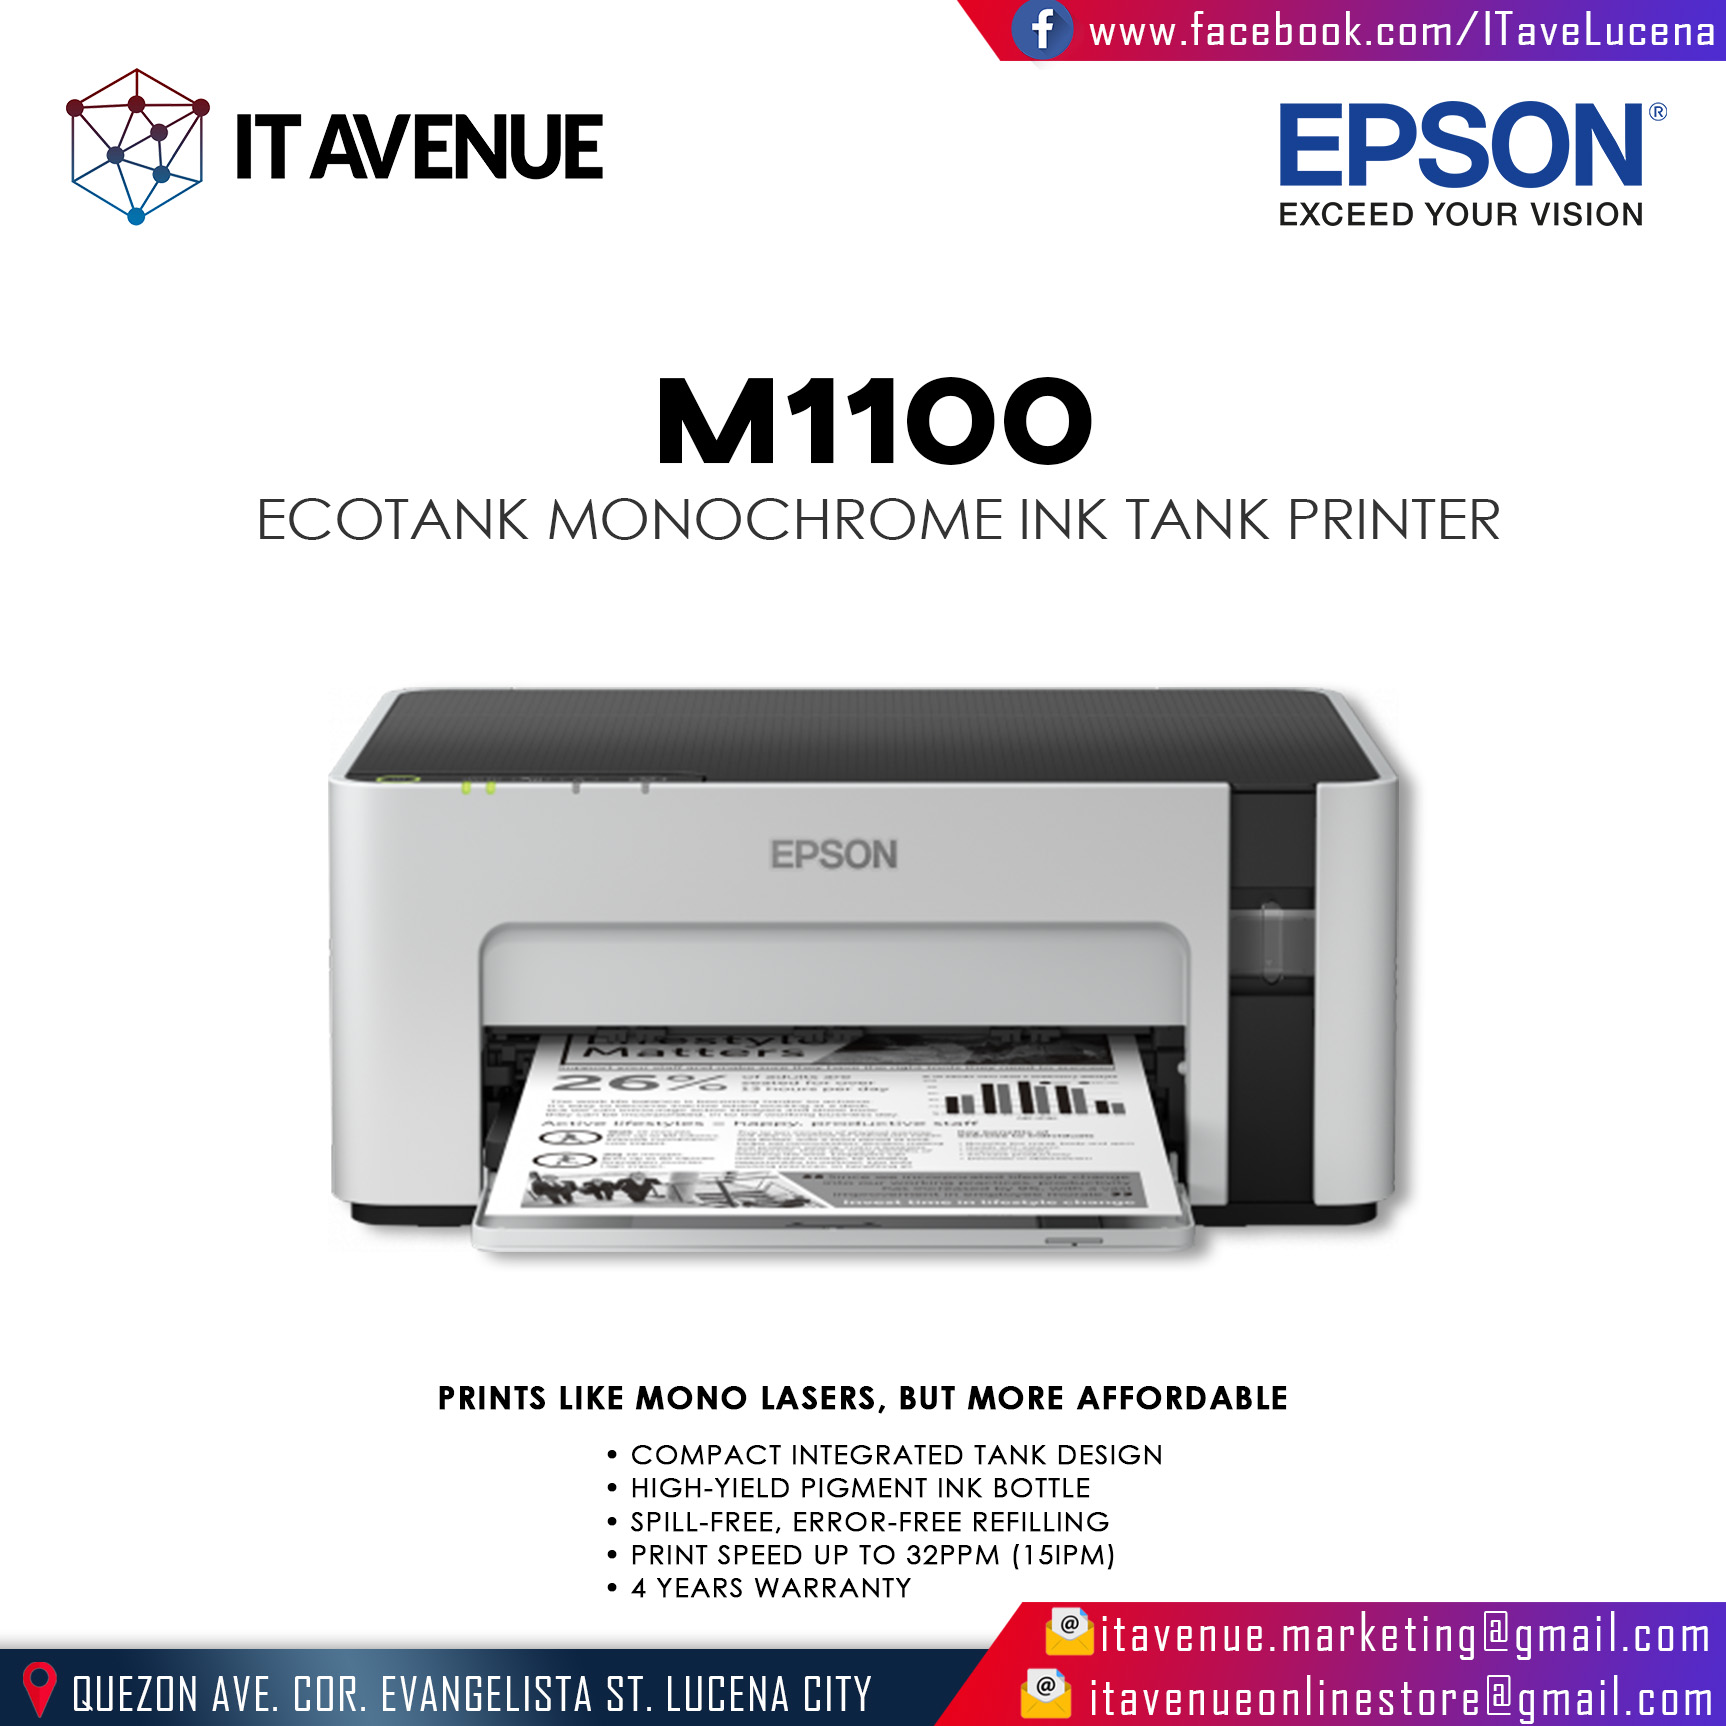 Epson Ecotank Monochrome M1100 Ink Tank Printer Lazada Ph 1986